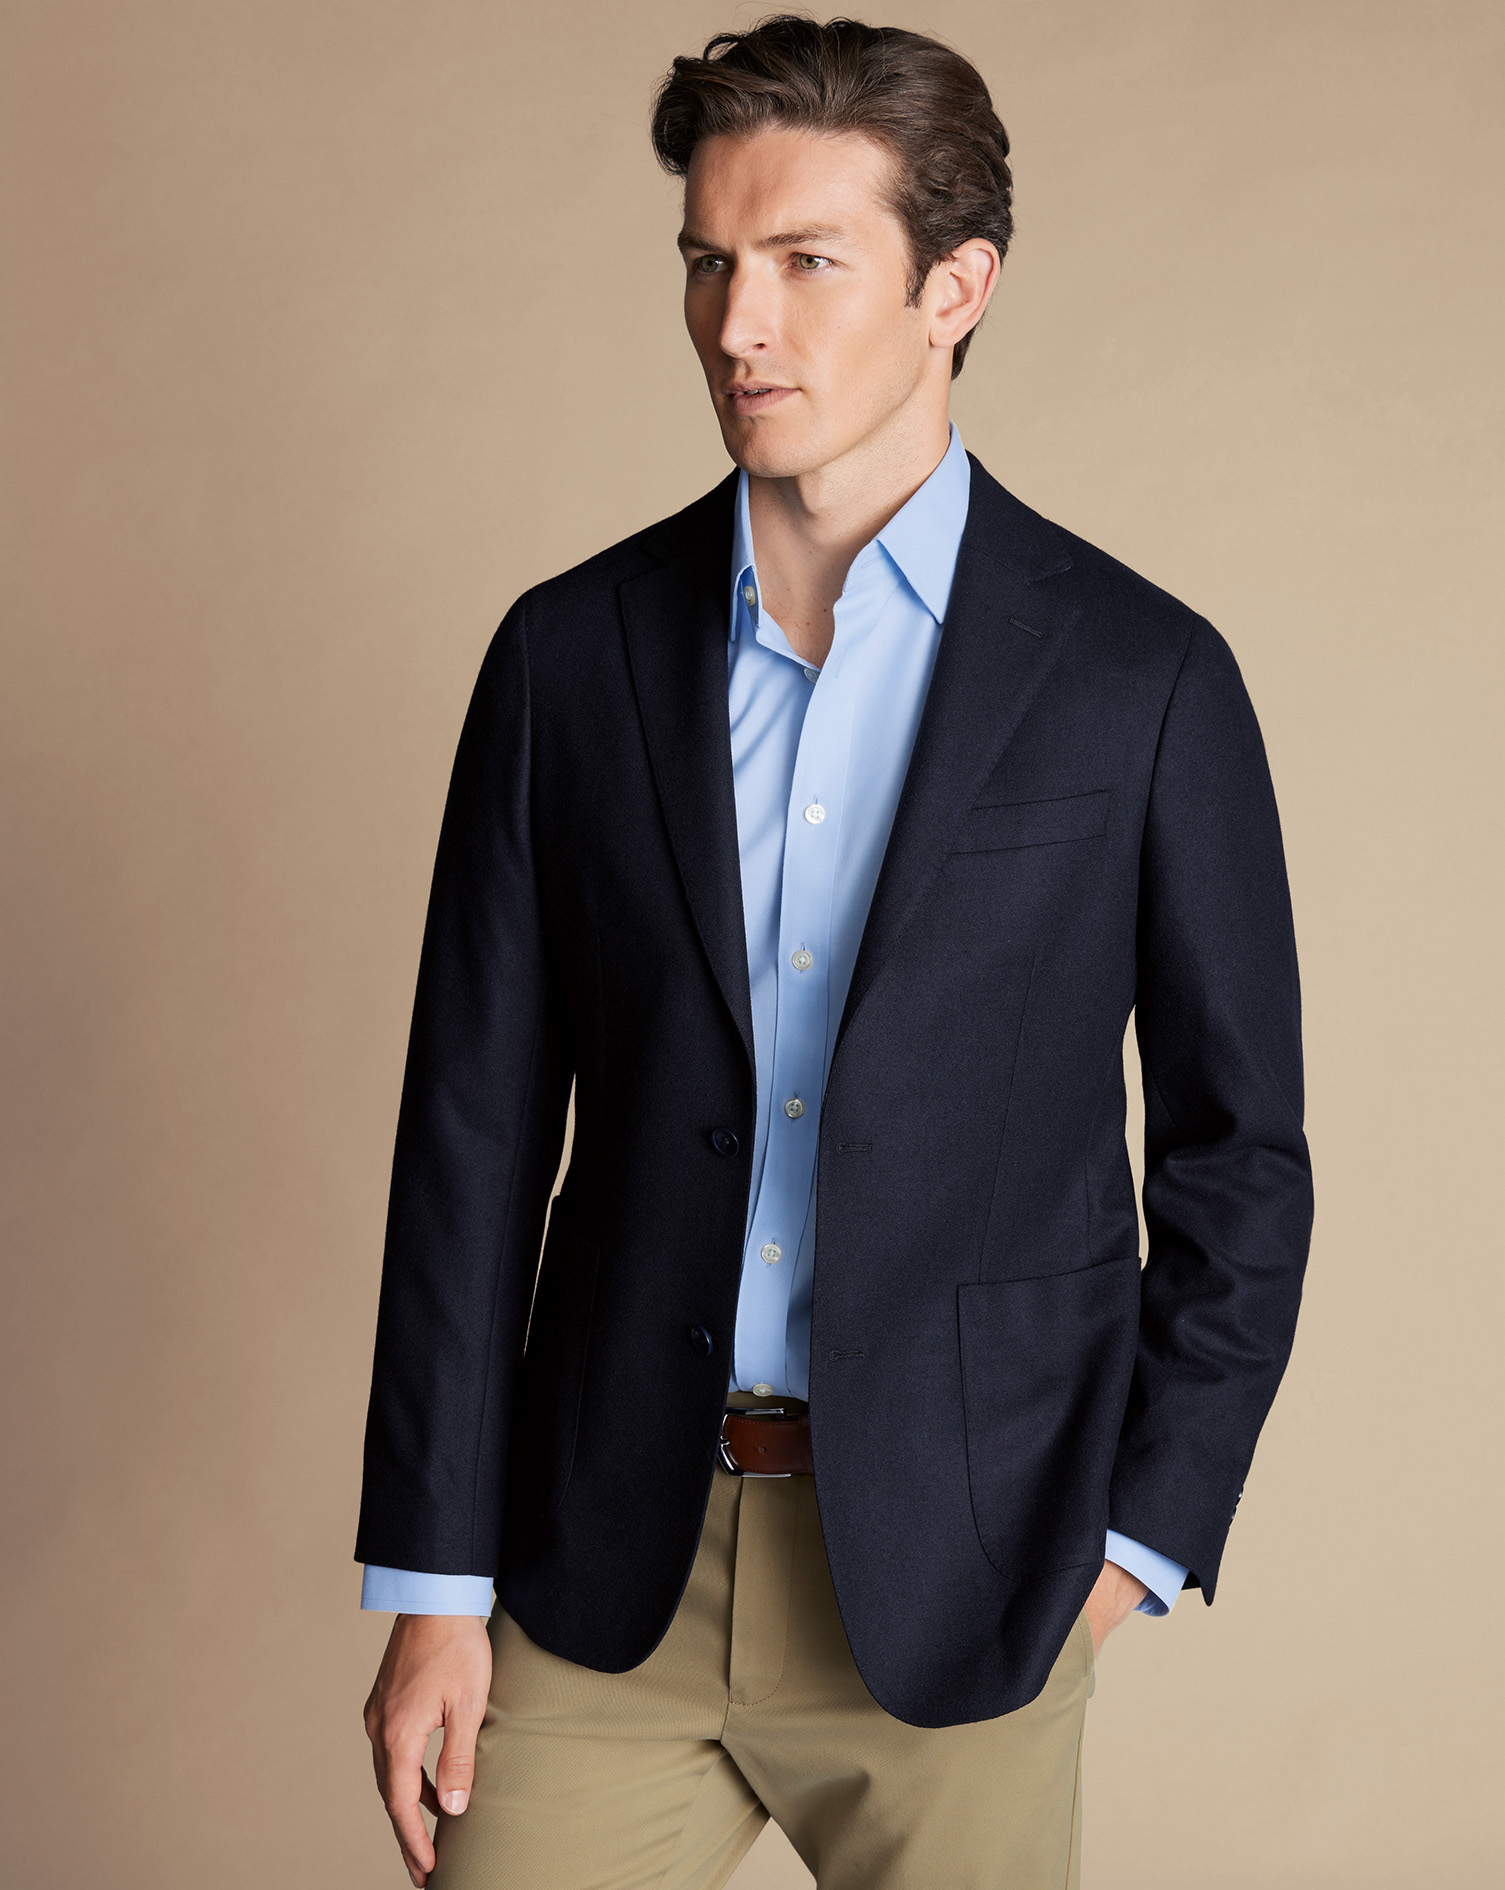 Men's Charles Tyrwhitt Unstructured Twill na Jacket - Navy Blue Size 38R Wool
